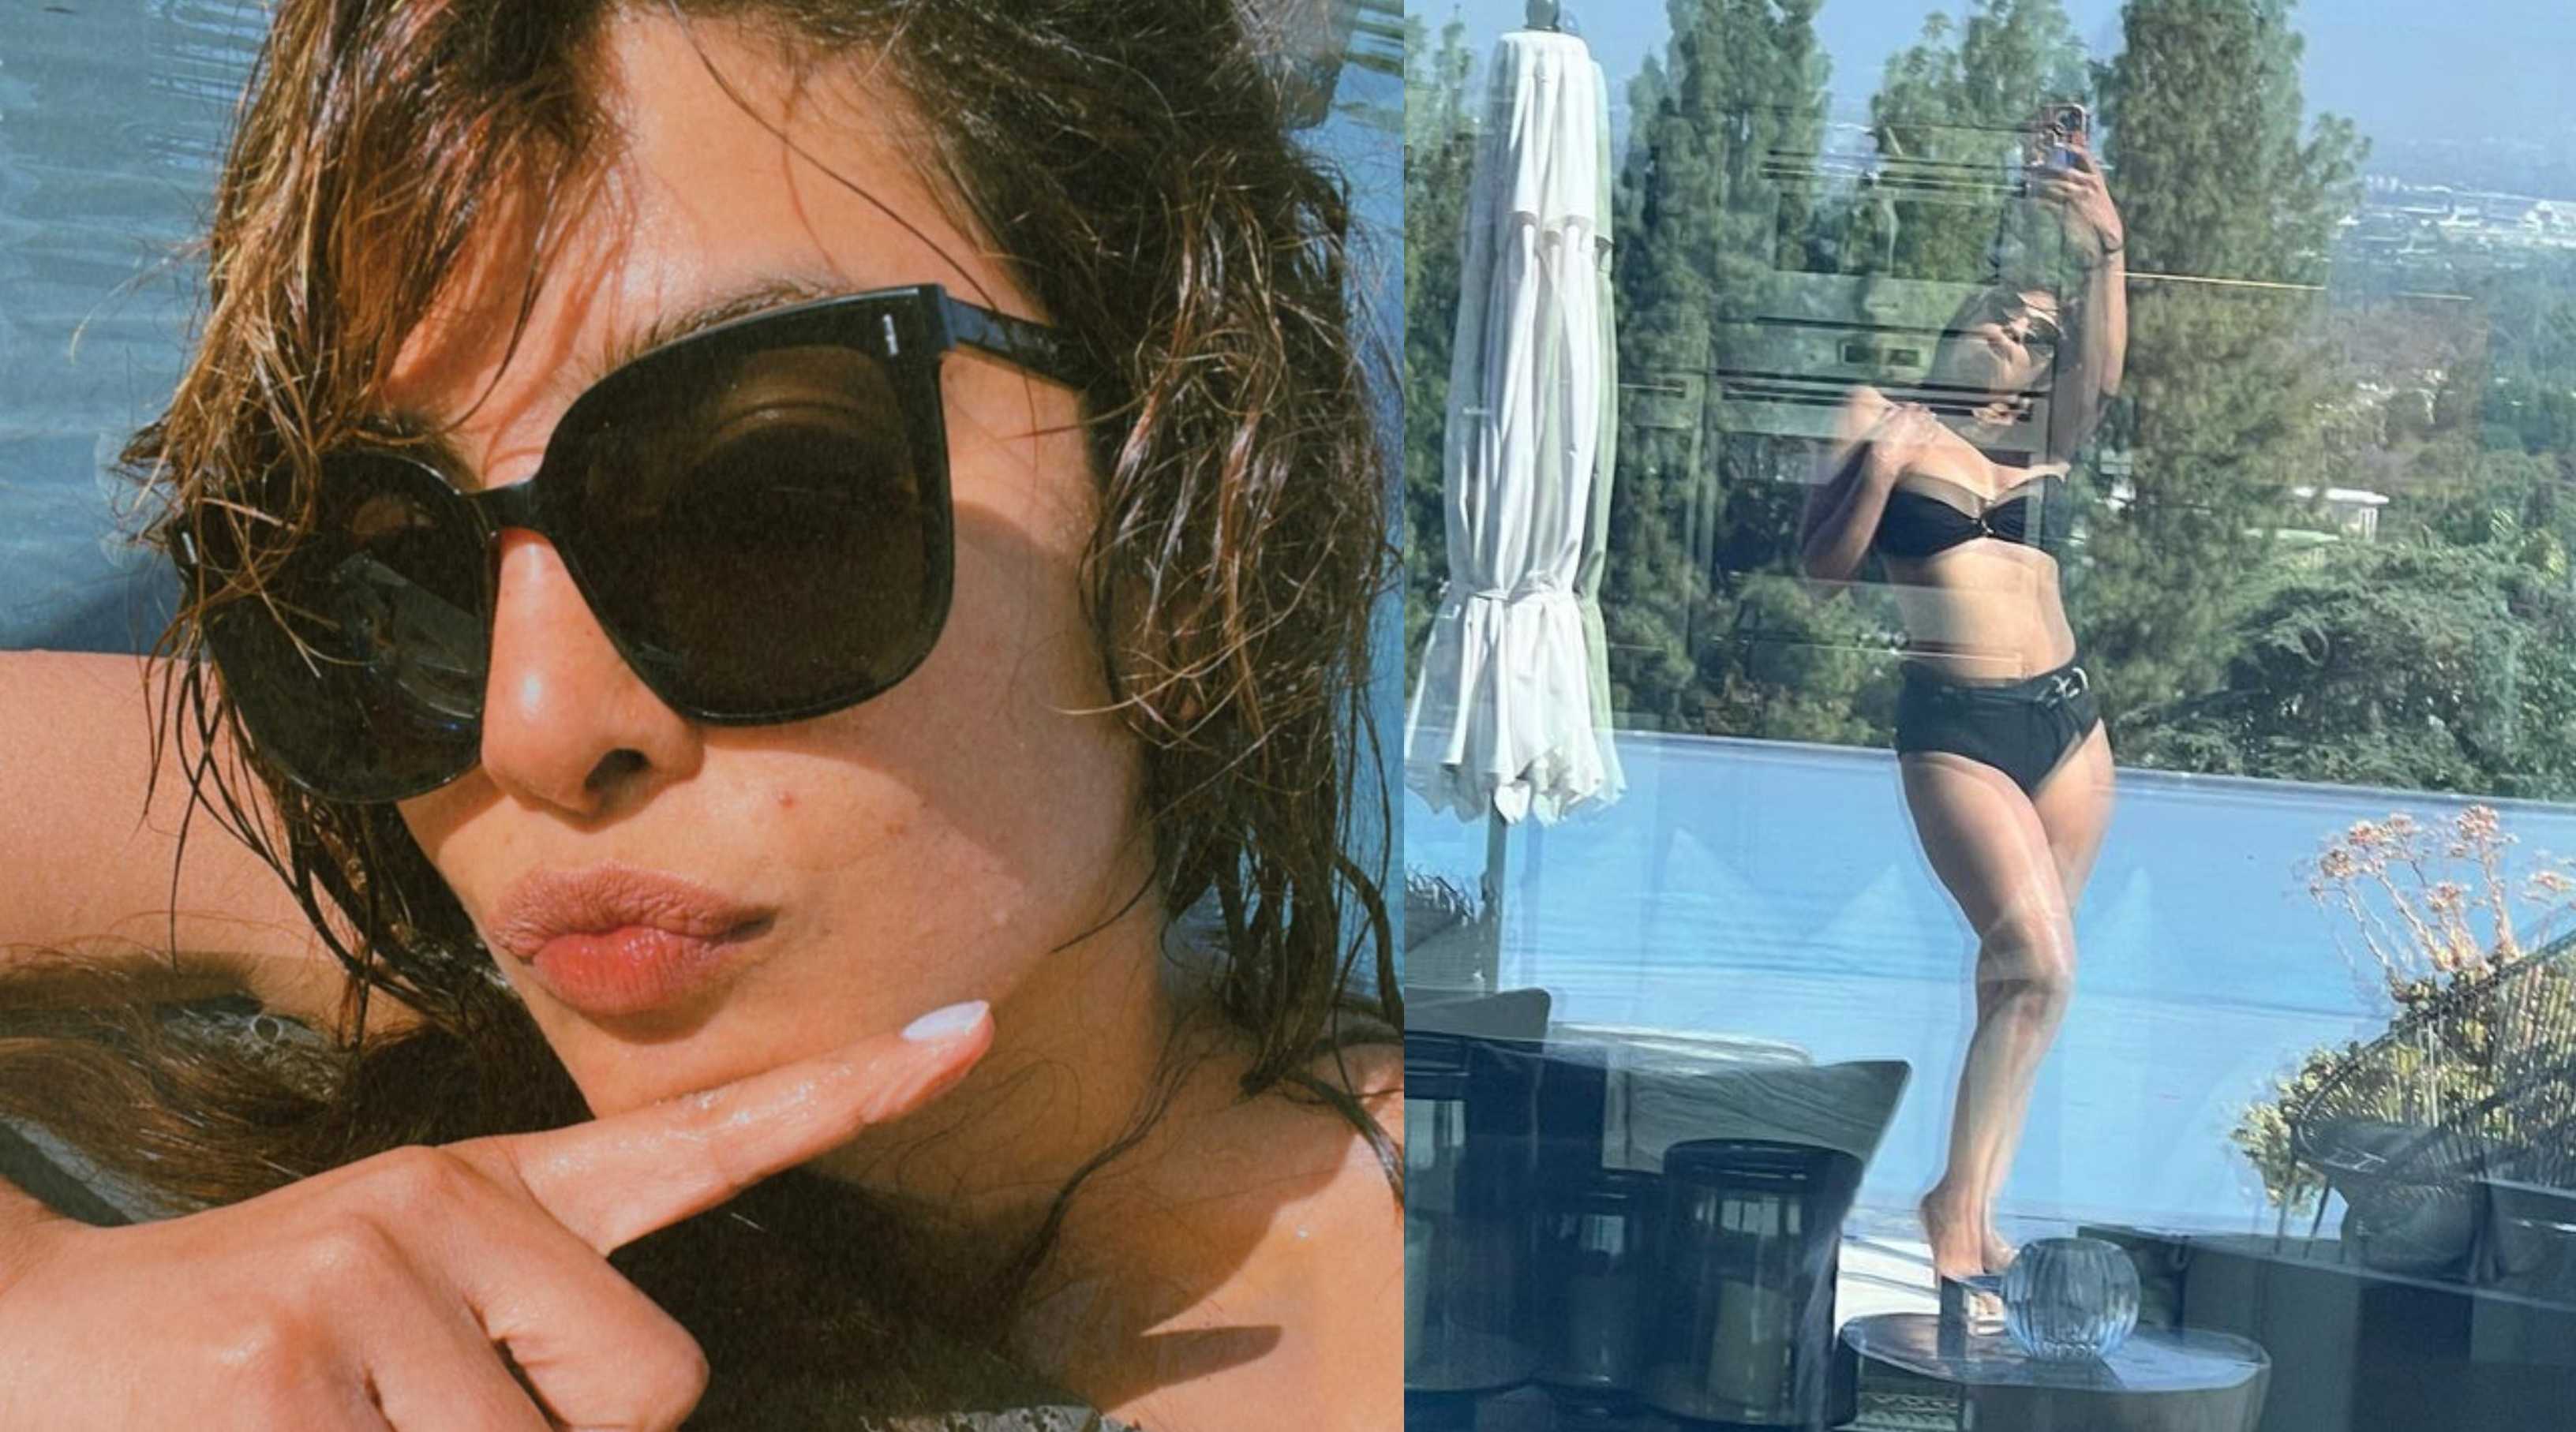 Priyanka Chopra enjoys 90s music as she chills at the pool in a black bikini; netizens gush over her playlist